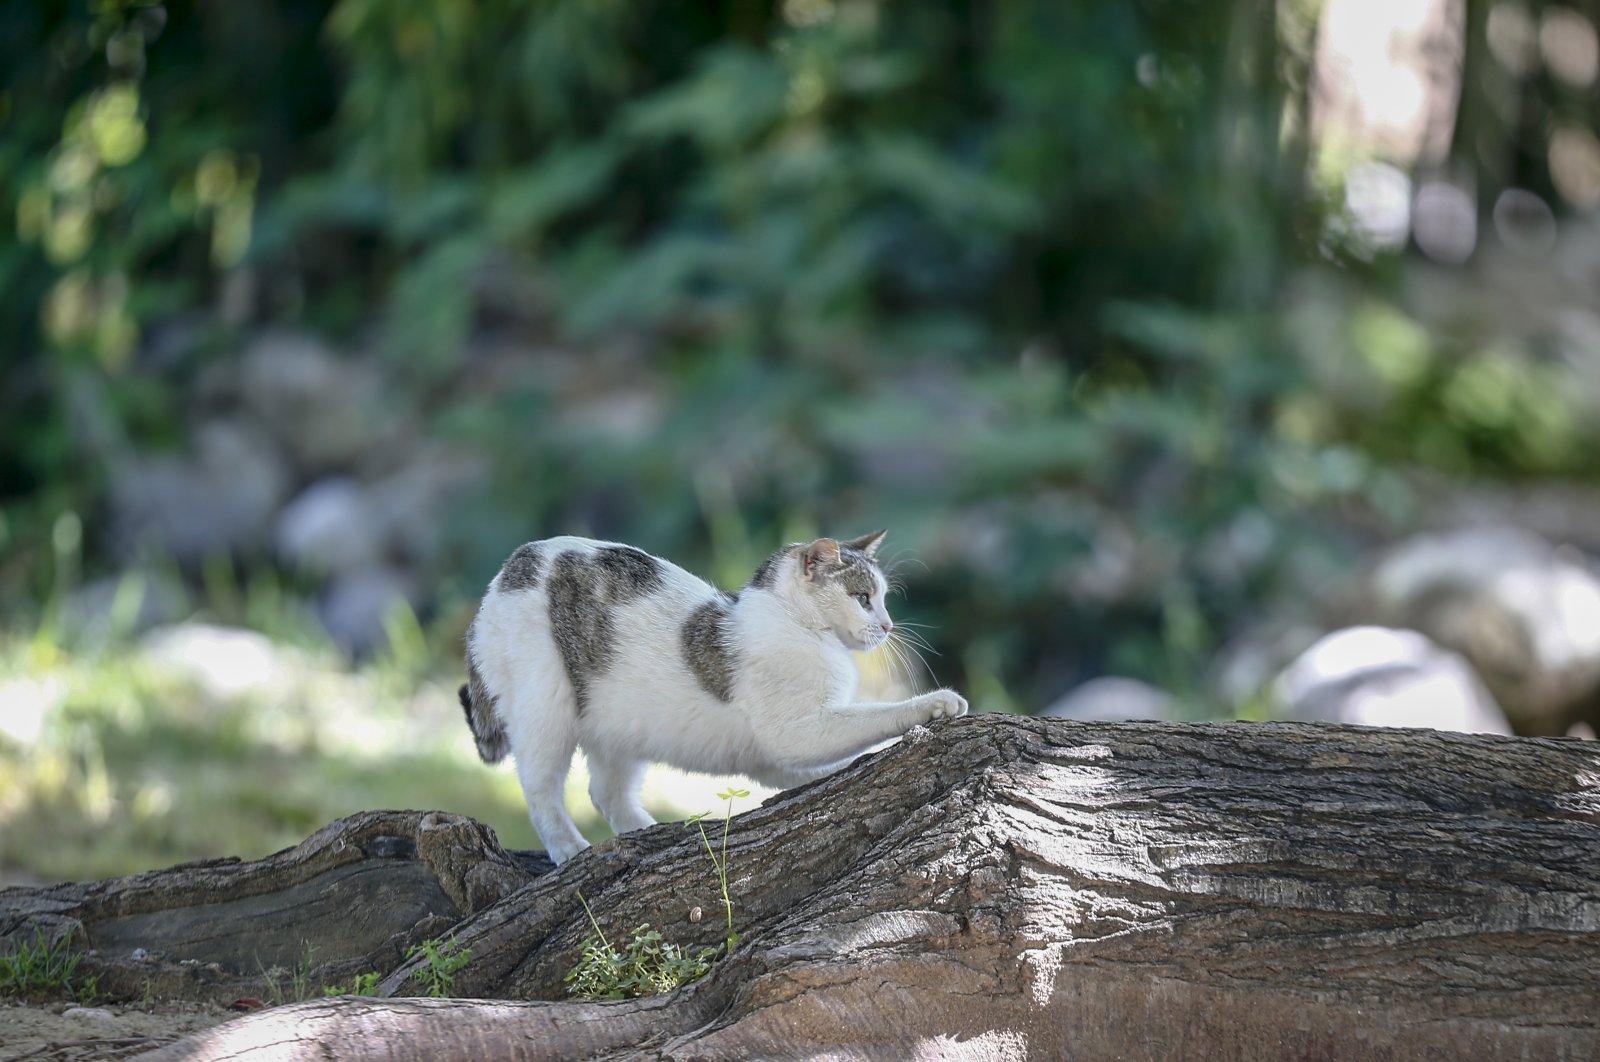 A cat seen in a park in Antalya, Turkey, May 11, 2020. (AA Photo)